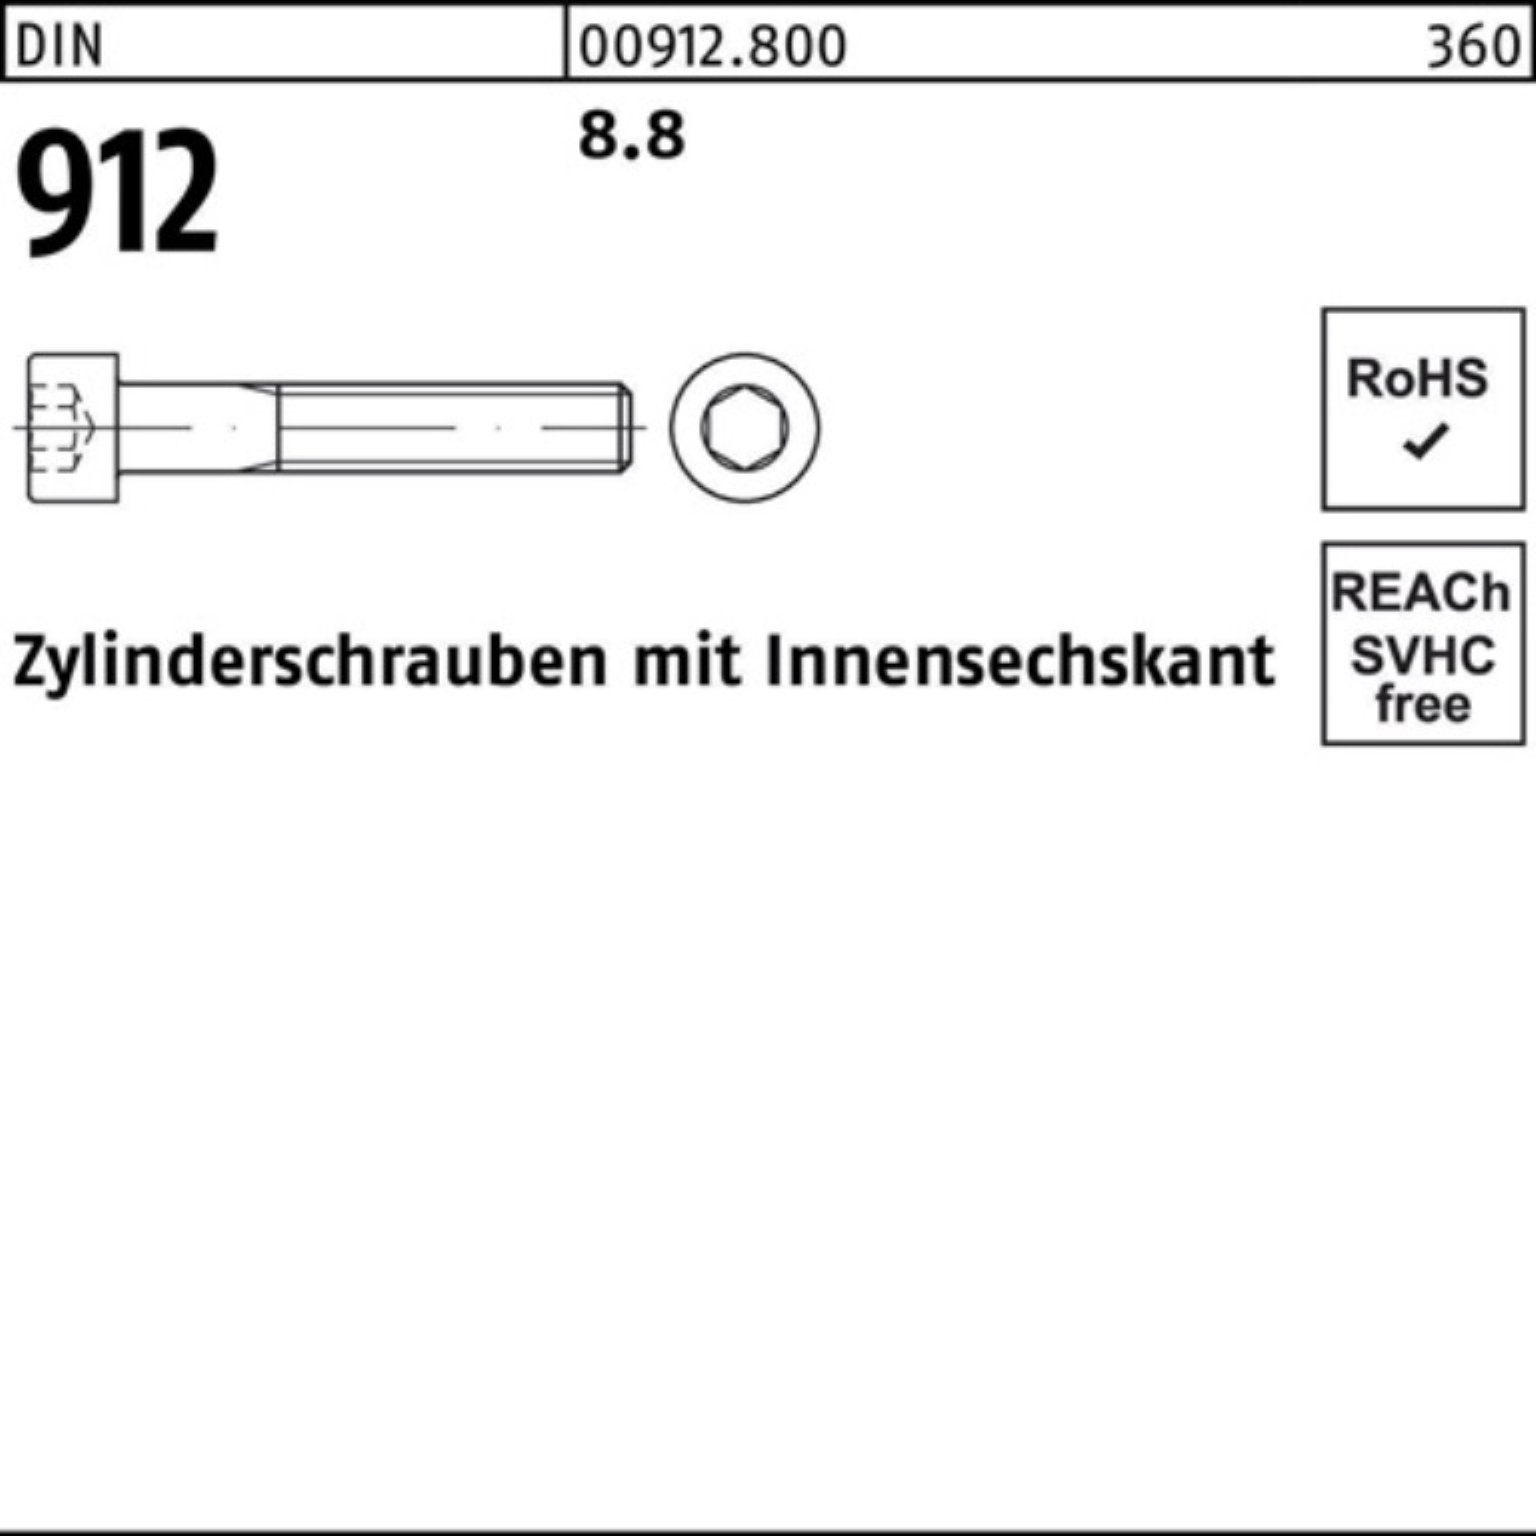 Buchhandlung Reyher Zylinderschraube 100er Pack 1 Stück 912 Innen-6kt 190 Zylinderschraube DIN M33x 8.8 DI